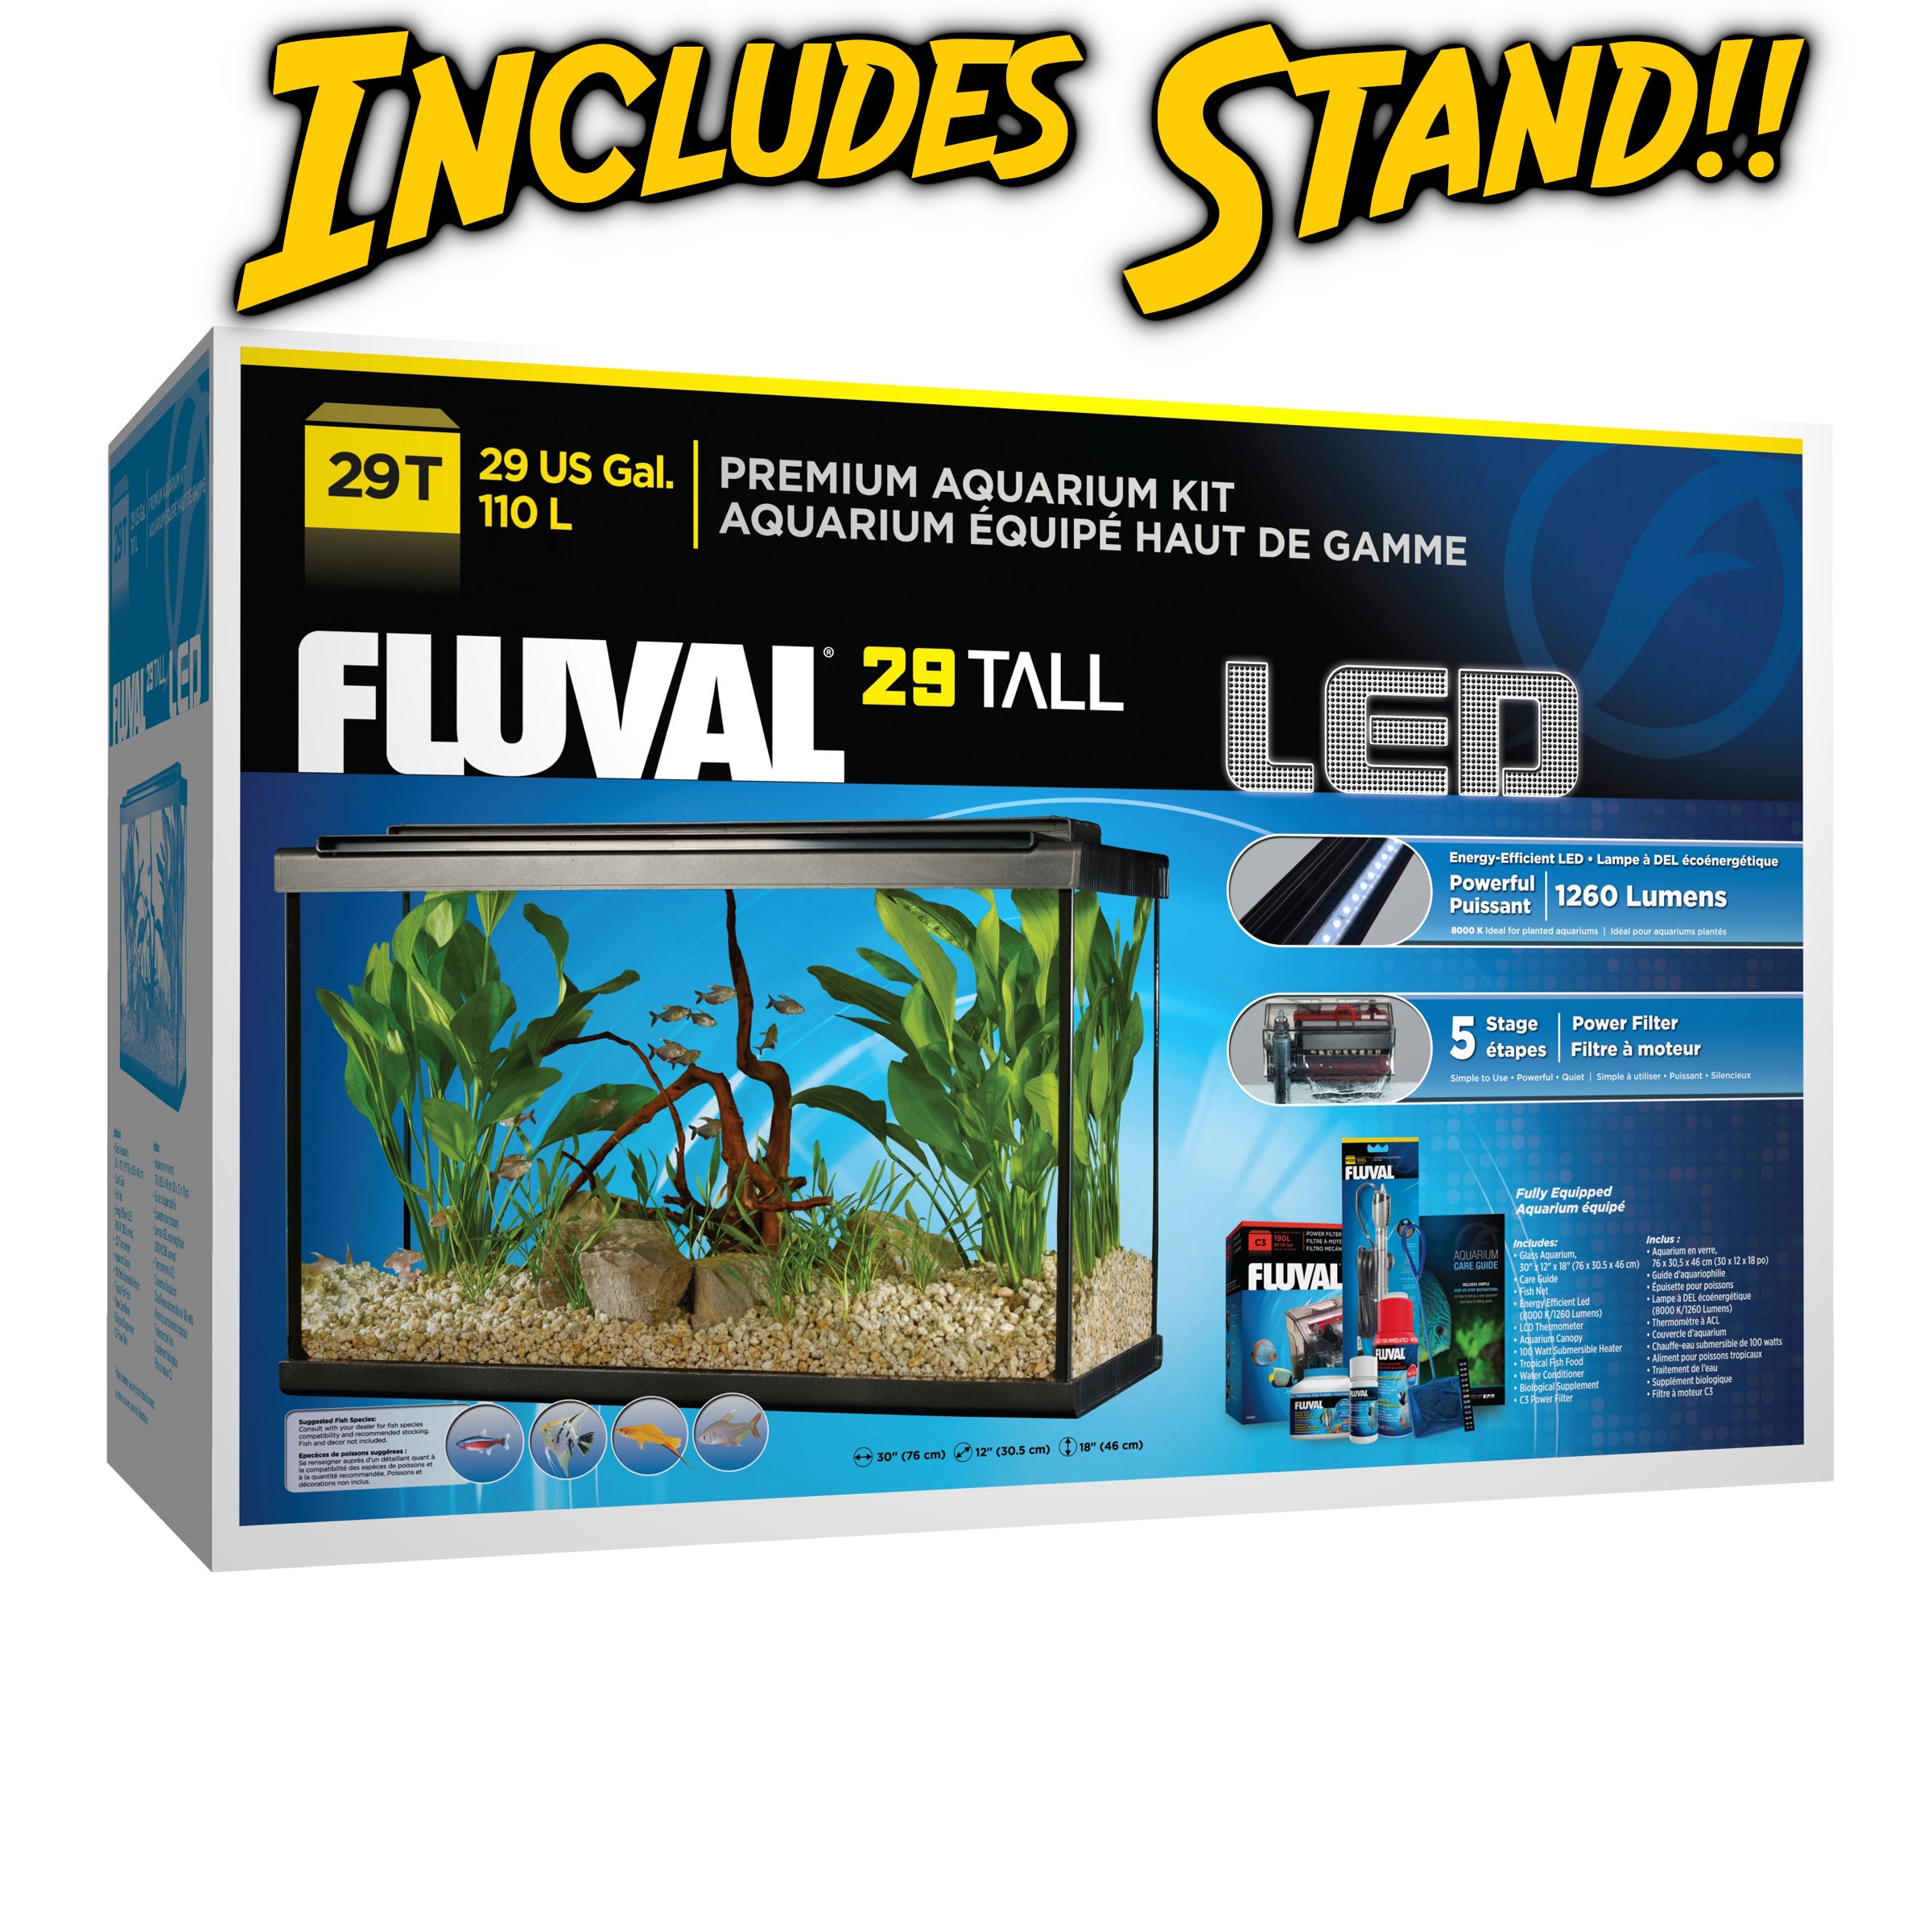 Fluval Premium Aquarium Kit (29 Tall) with LED - Black - STAND INCLUDE